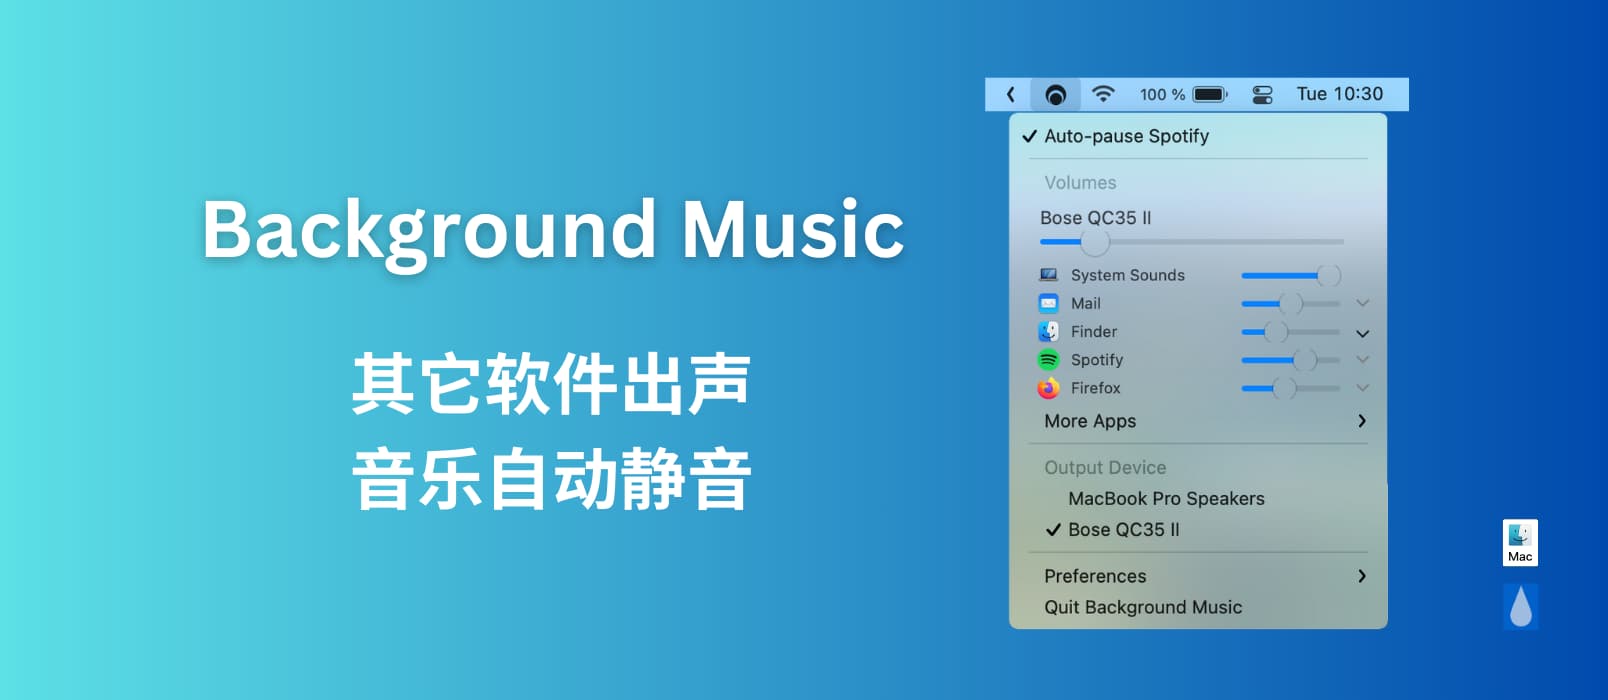 Background Music – 有其它声音时，自动暂停音乐[macOS]